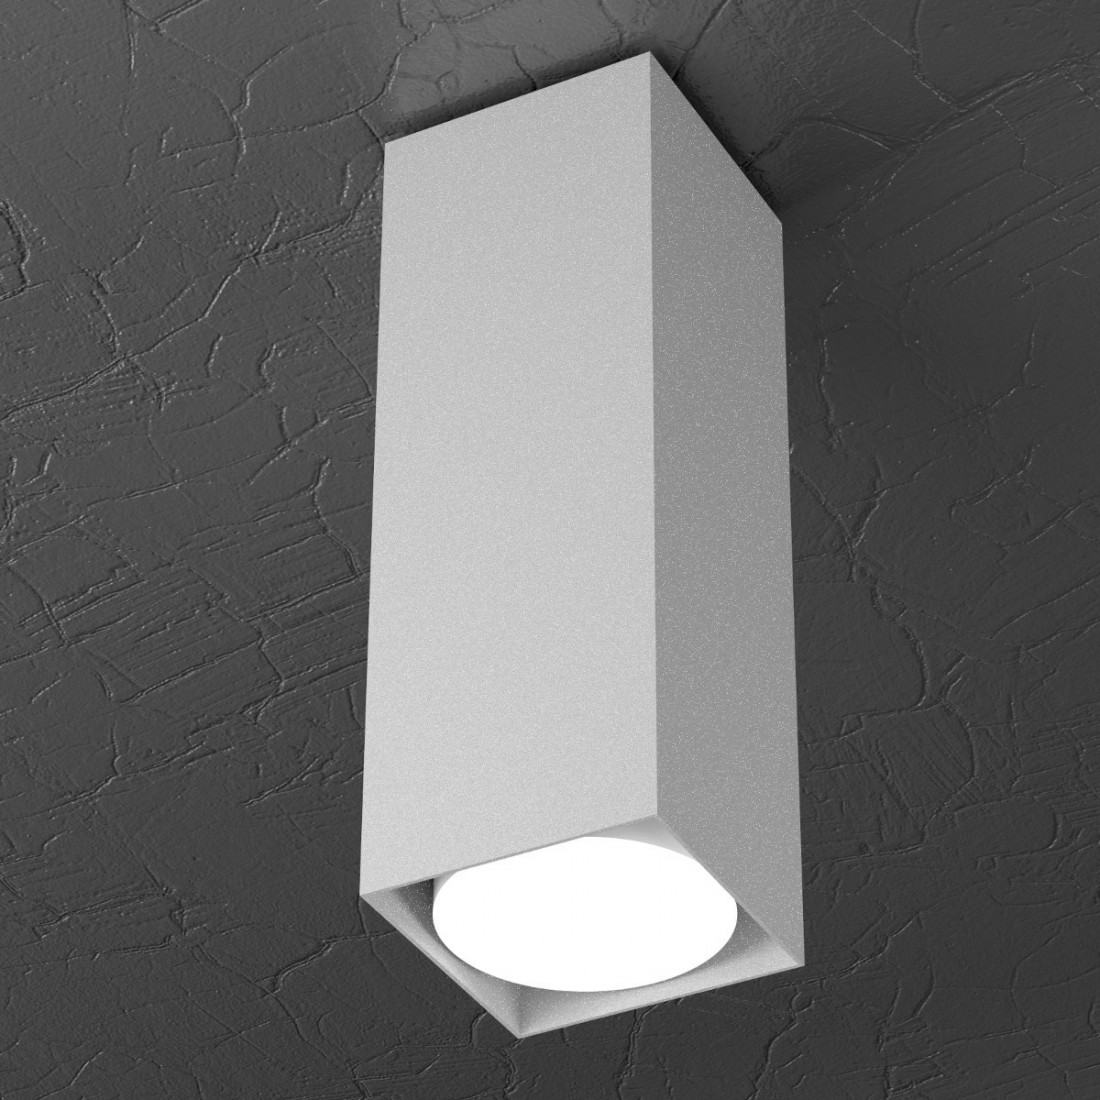 Plafoniera TP-PLATE 1129 PL25 Gx53 LED 8x8 metallo bianco grigio sabbia lampada soffitto cubo moderno quadrata interno